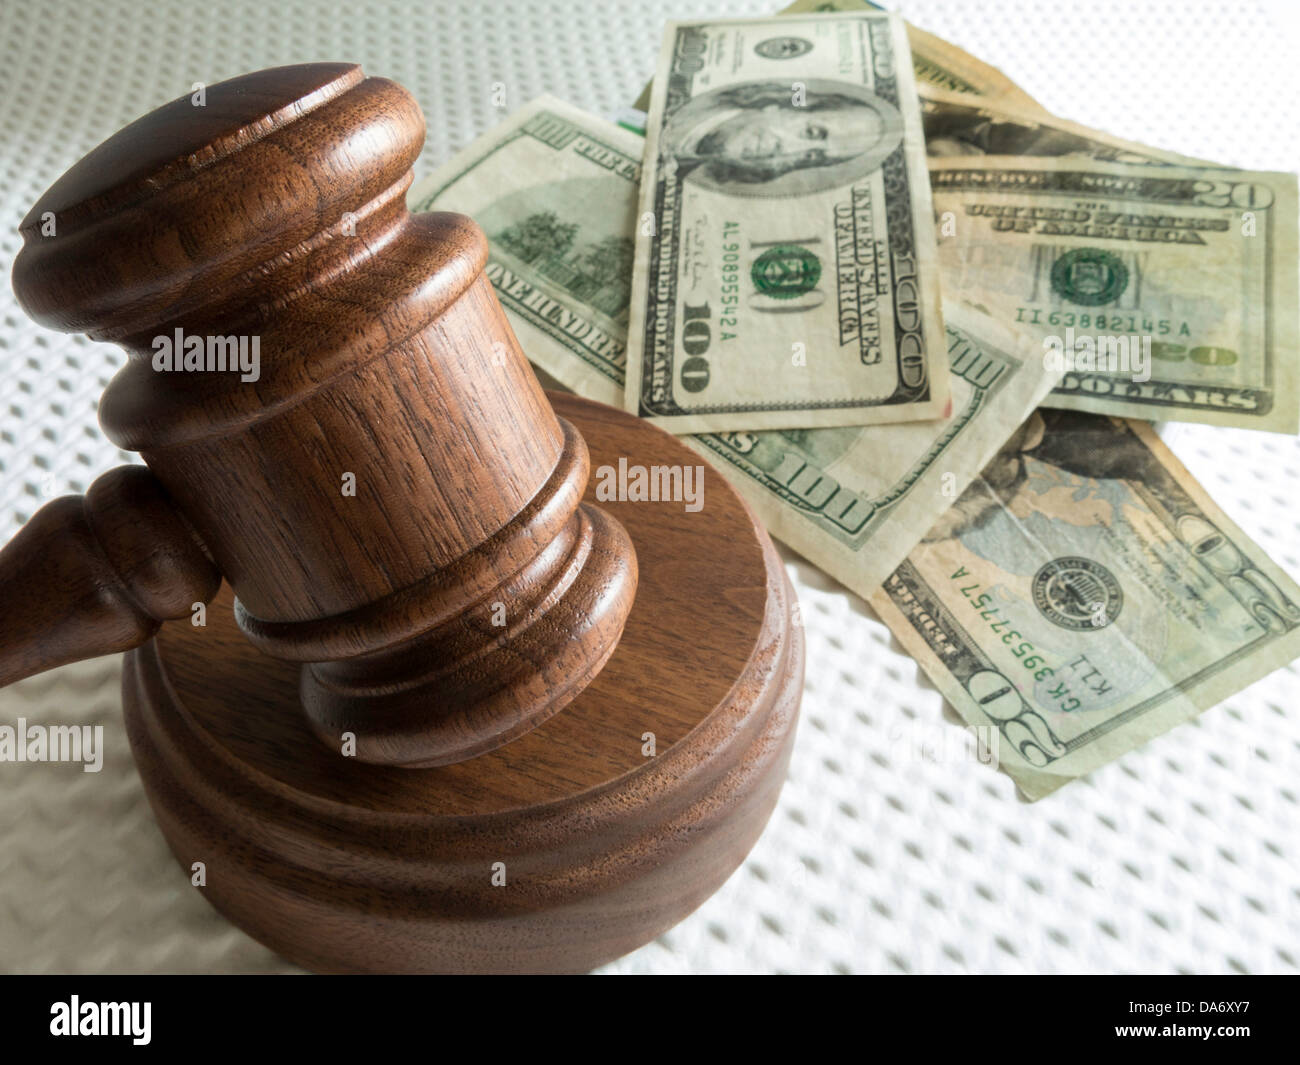 Still Life, Judge's Gavel and Striker Block With Money, USA Stock Photo